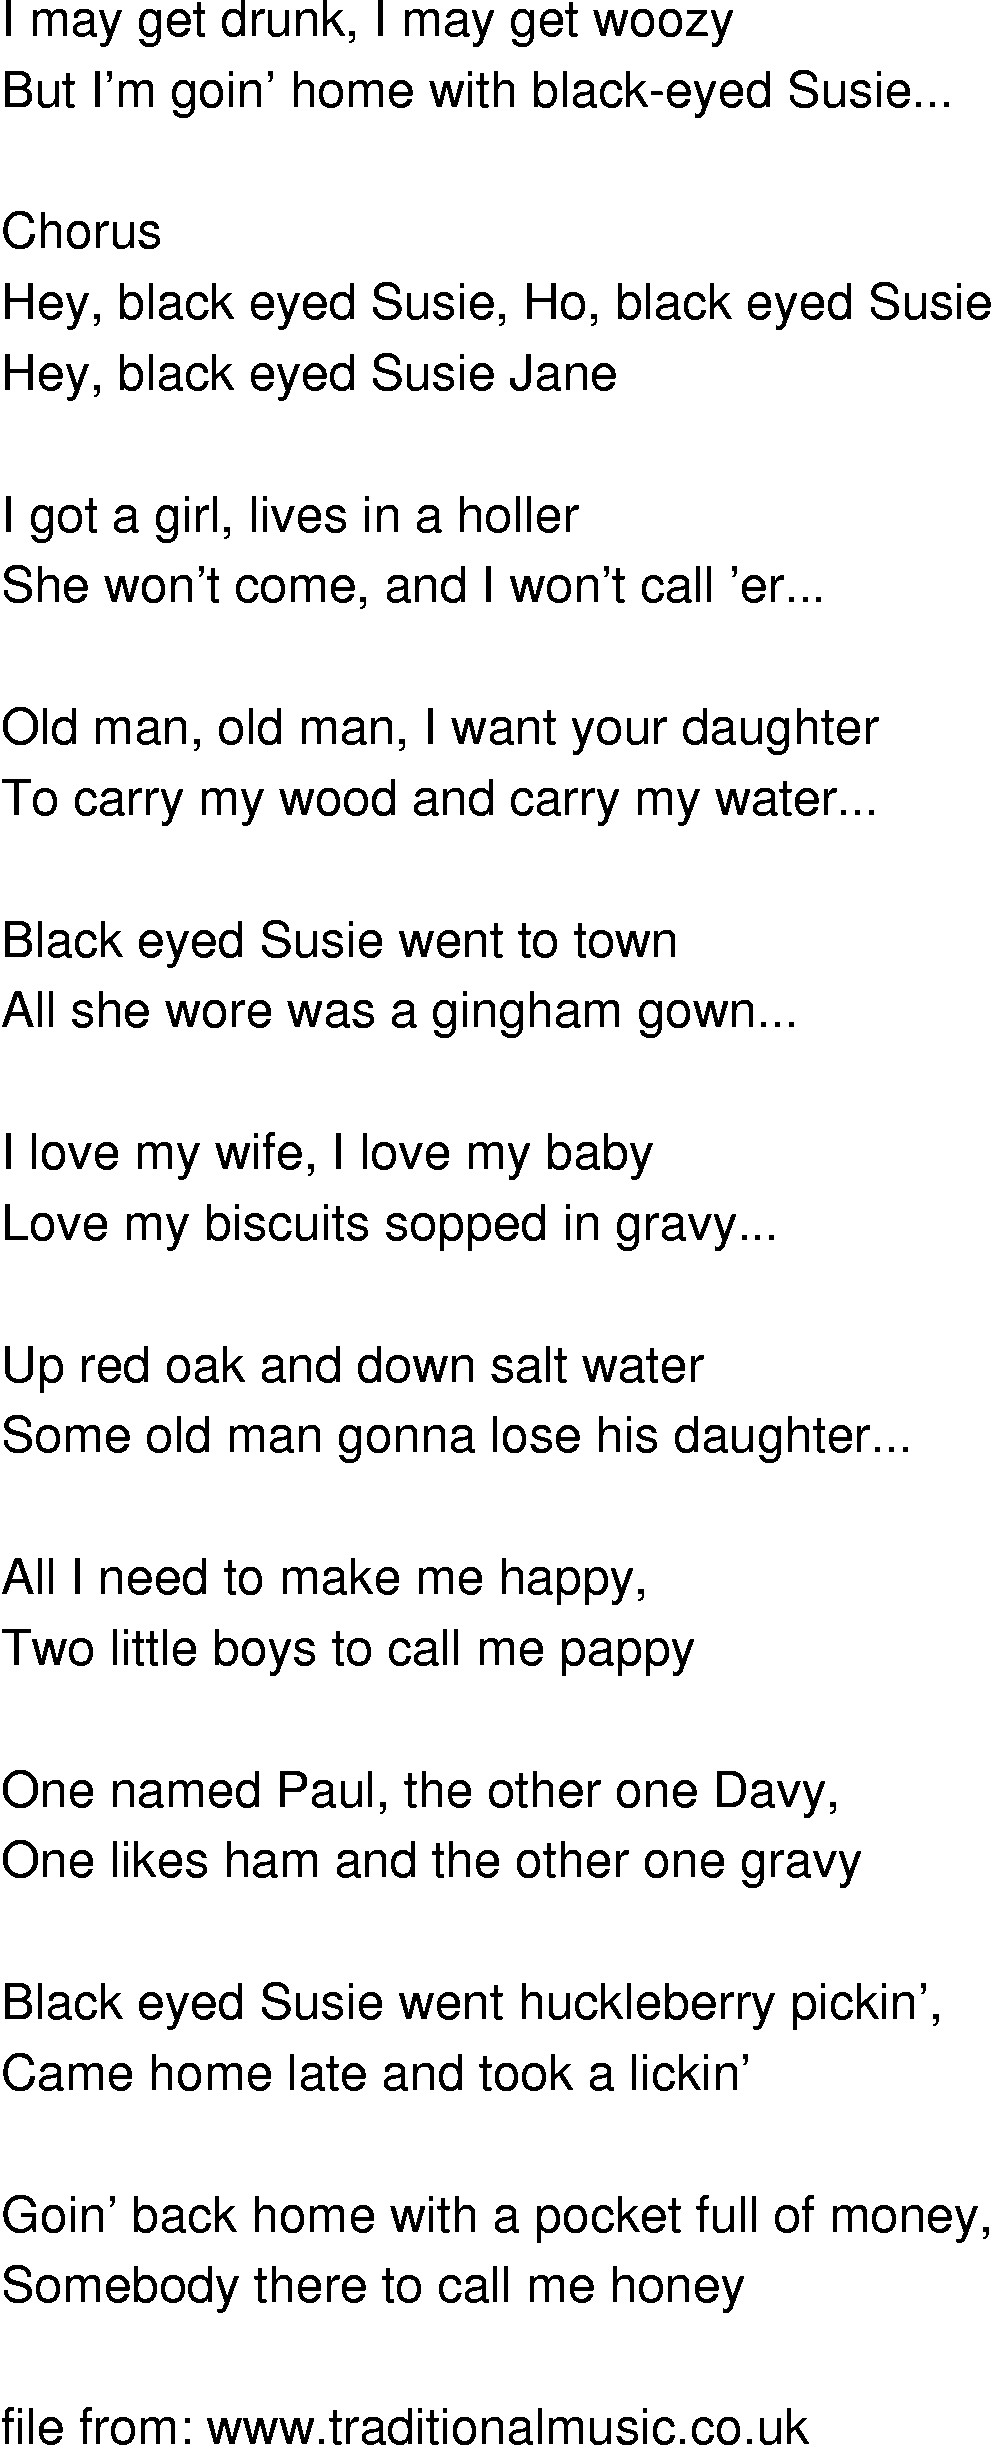 Old-Time (oldtimey) Song Lyrics - black eyed susie